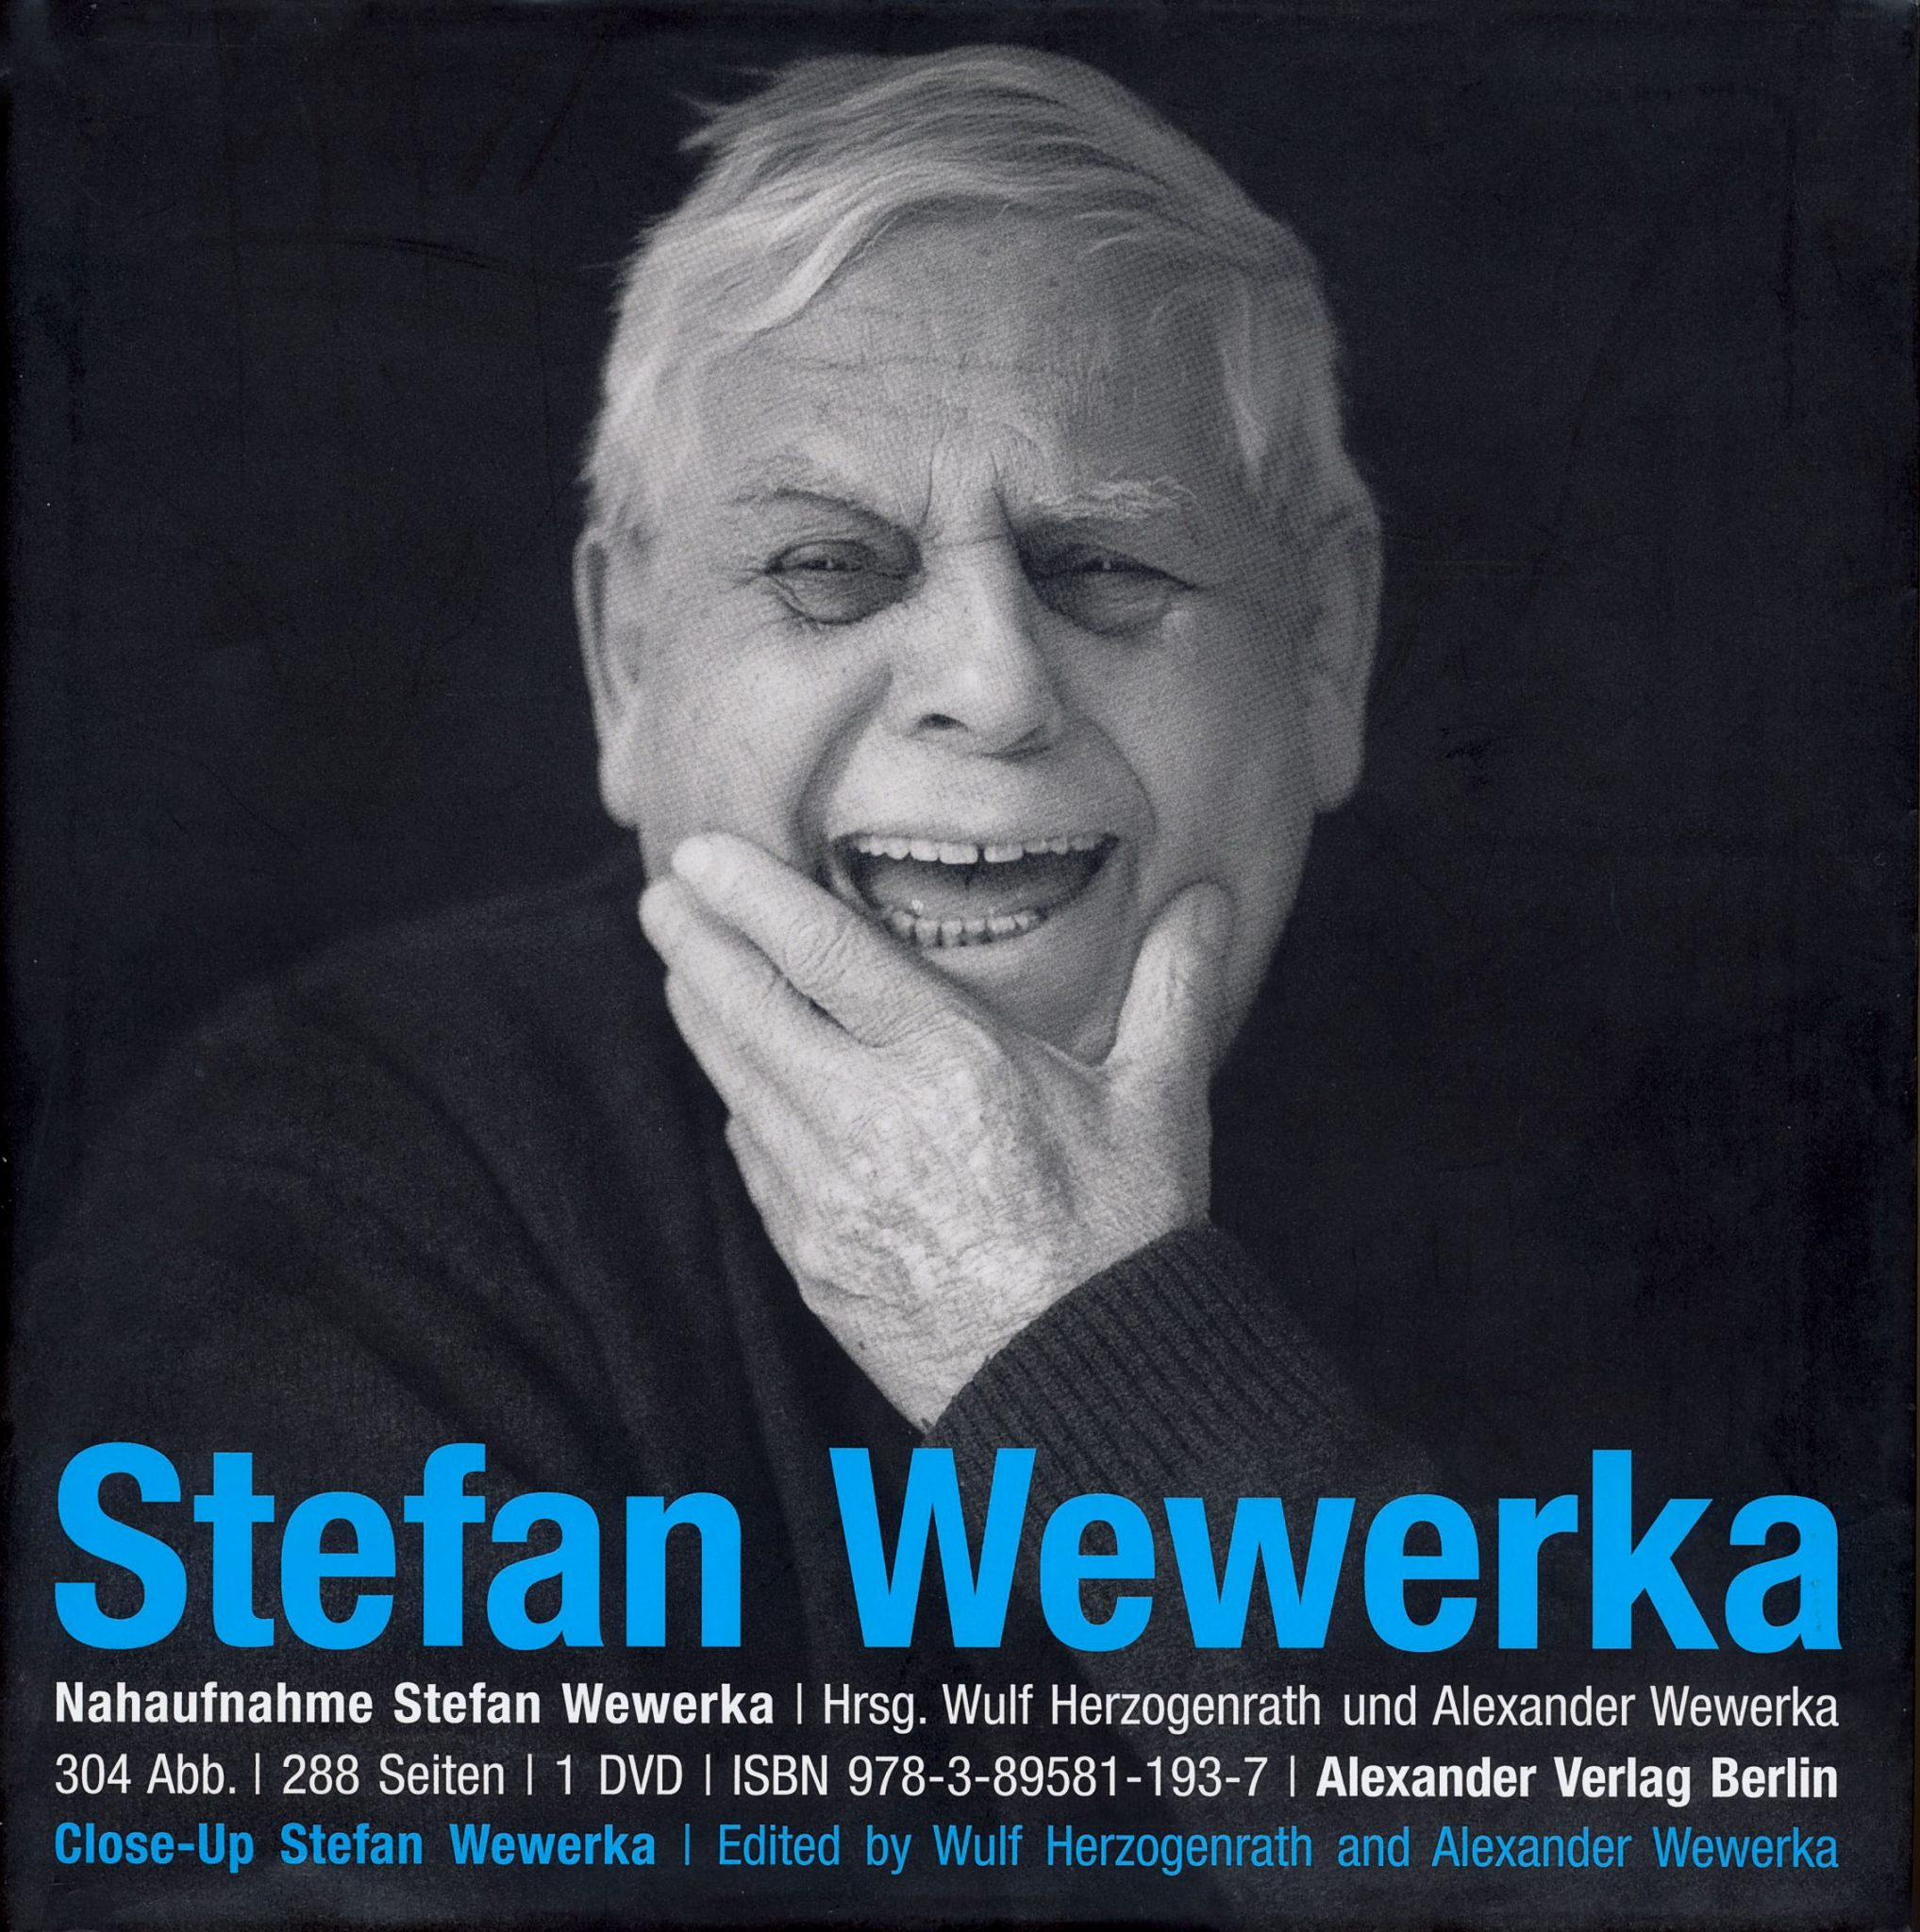 Nahaufnahme Stefan Wewerka